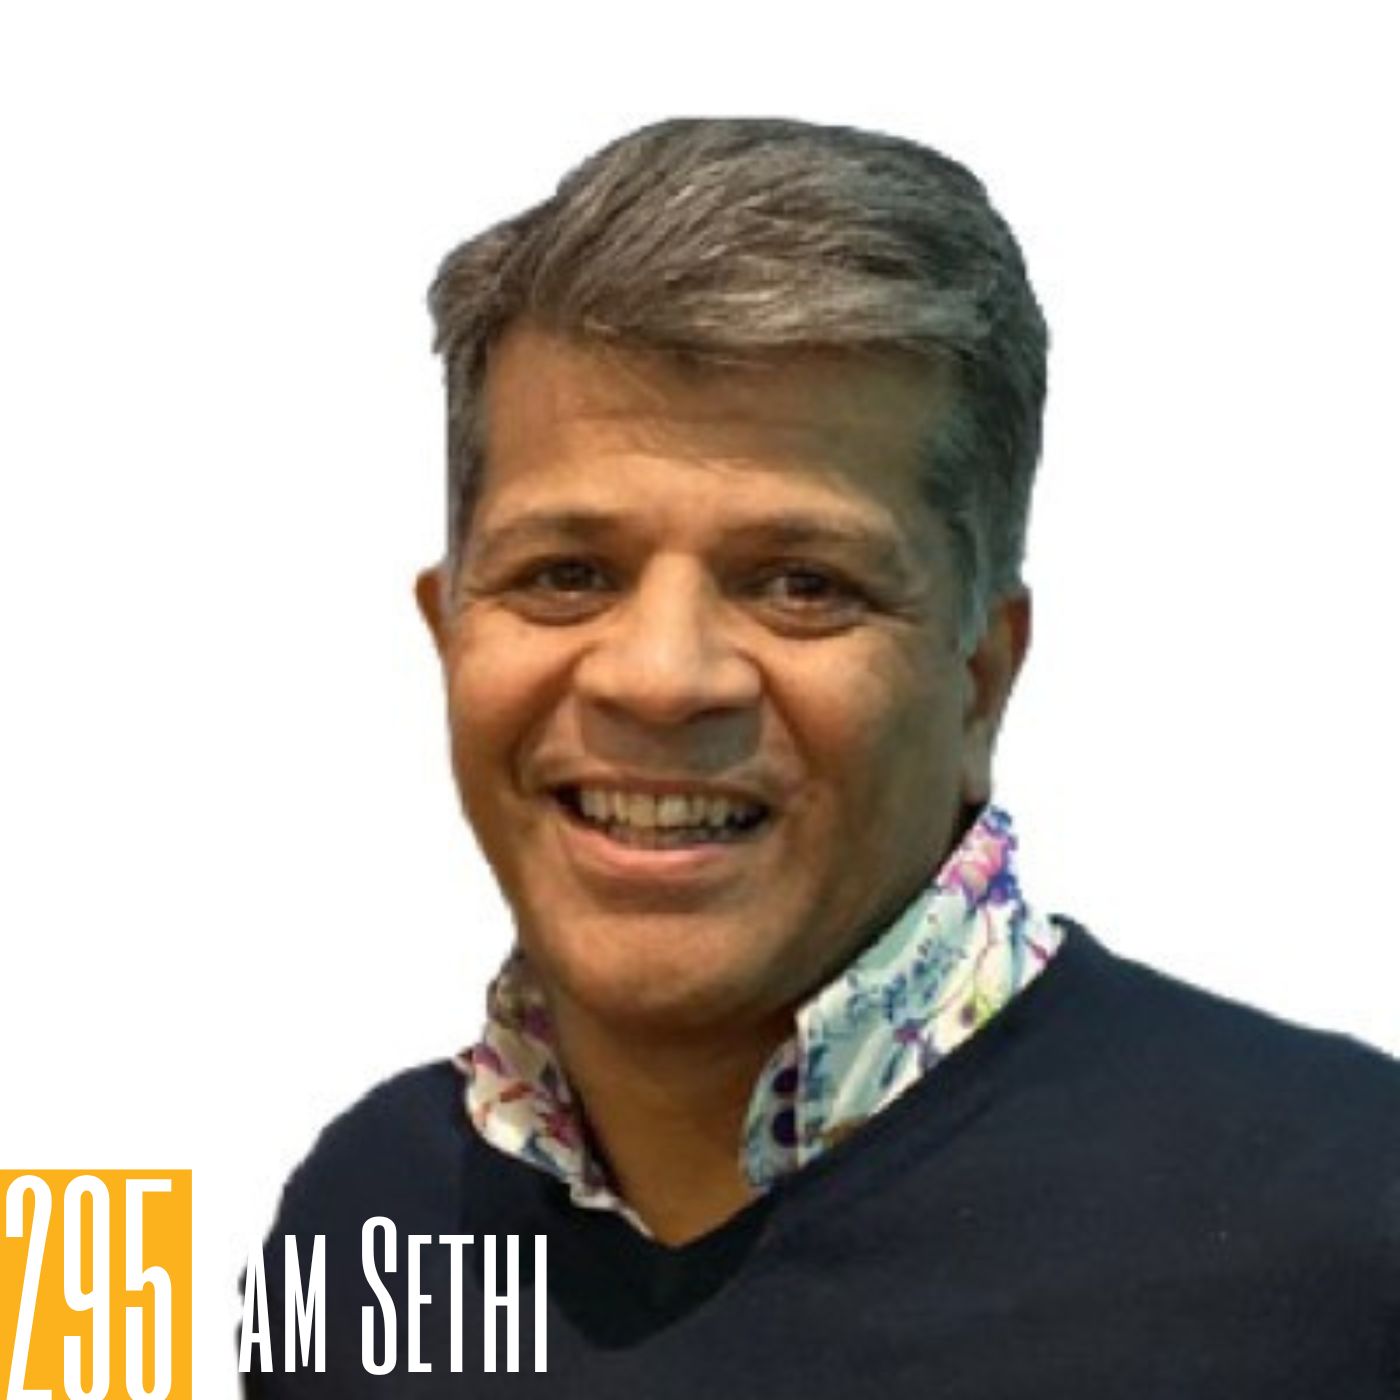 295 Sam Sethi - Self-Deprecation, Sarcasm & Creating Communities Through Podcasting